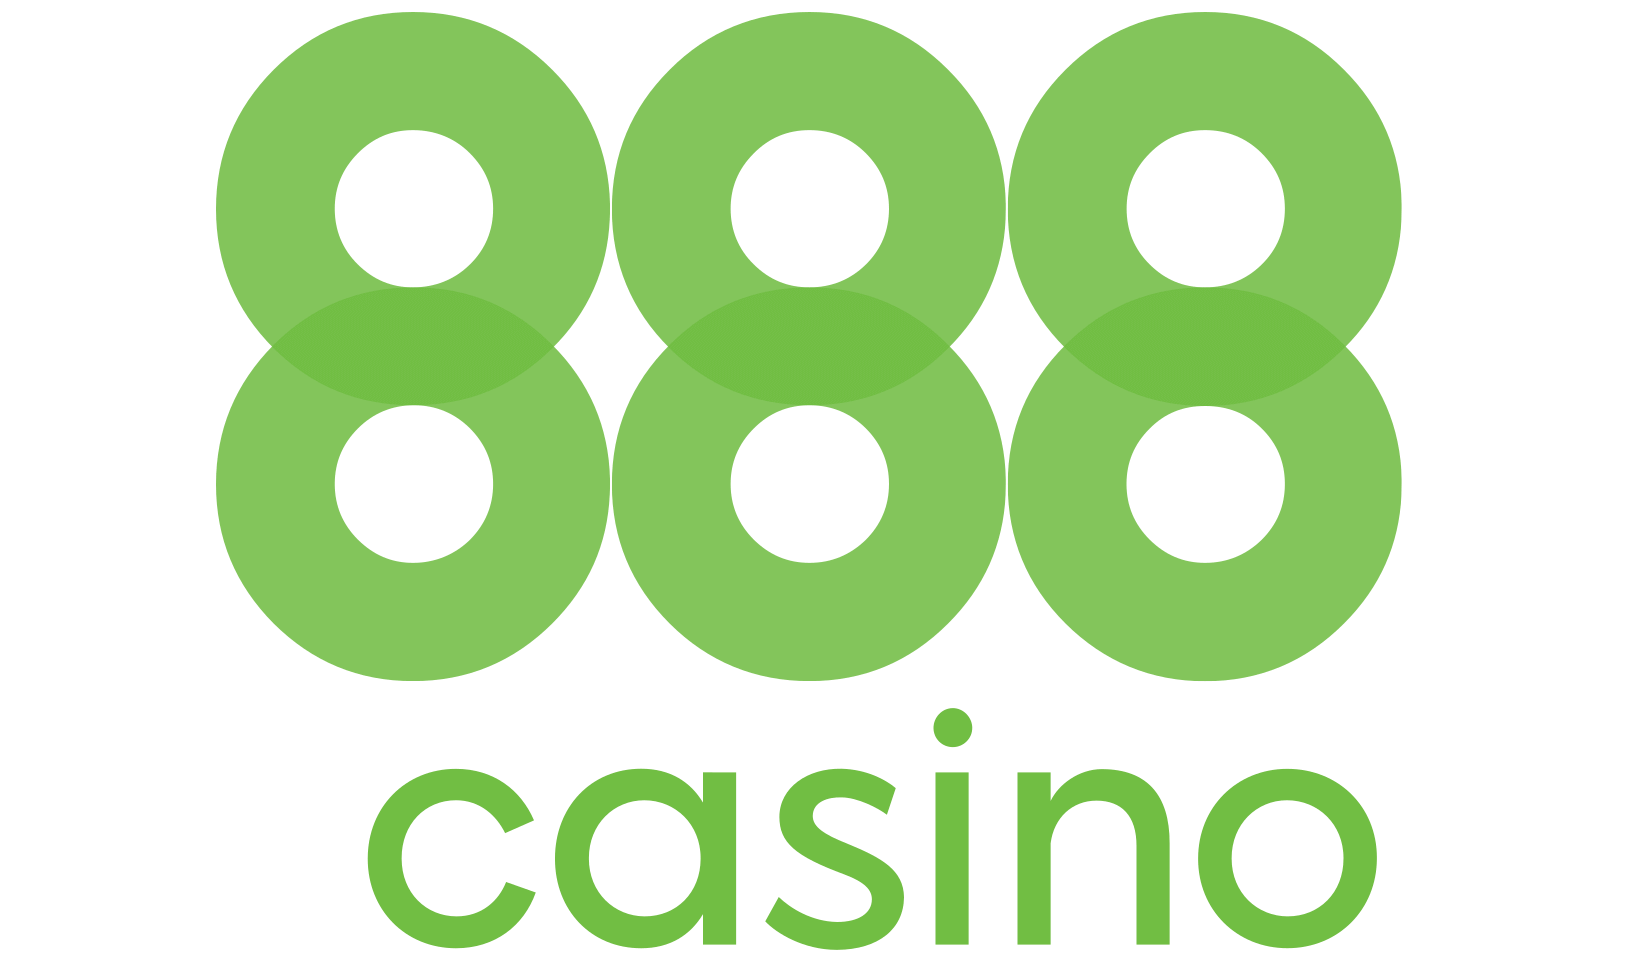 888 Casino promo code